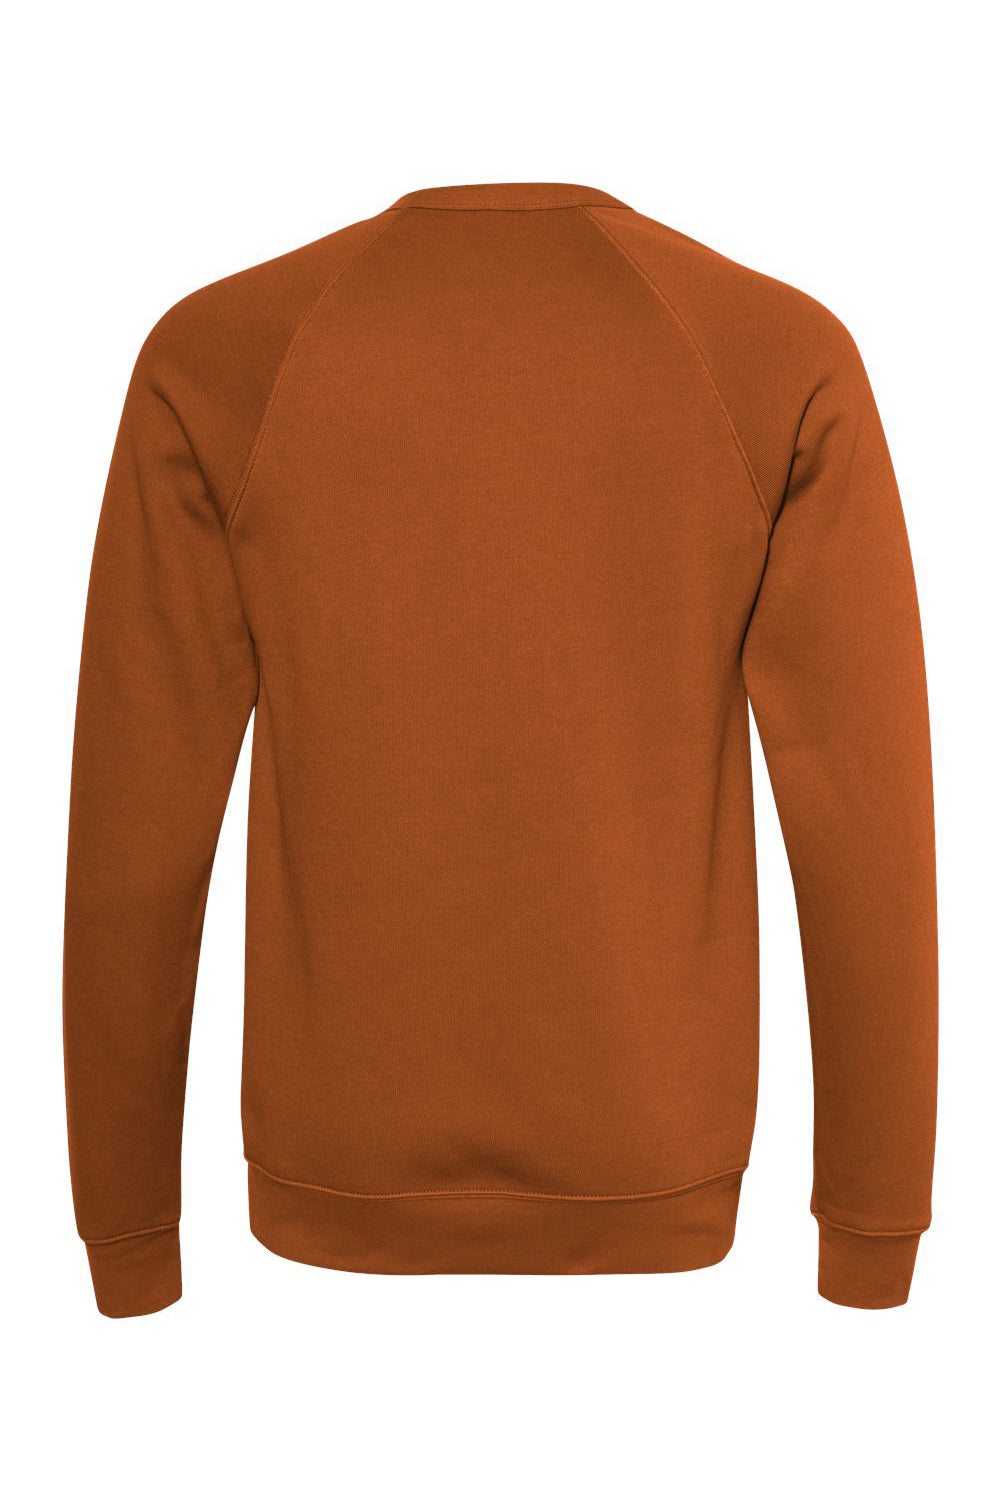 Bella + Canvas BC3901/3901 Mens Sponge Fleece Crewneck Sweatshirt Autumn Orange Flat Back